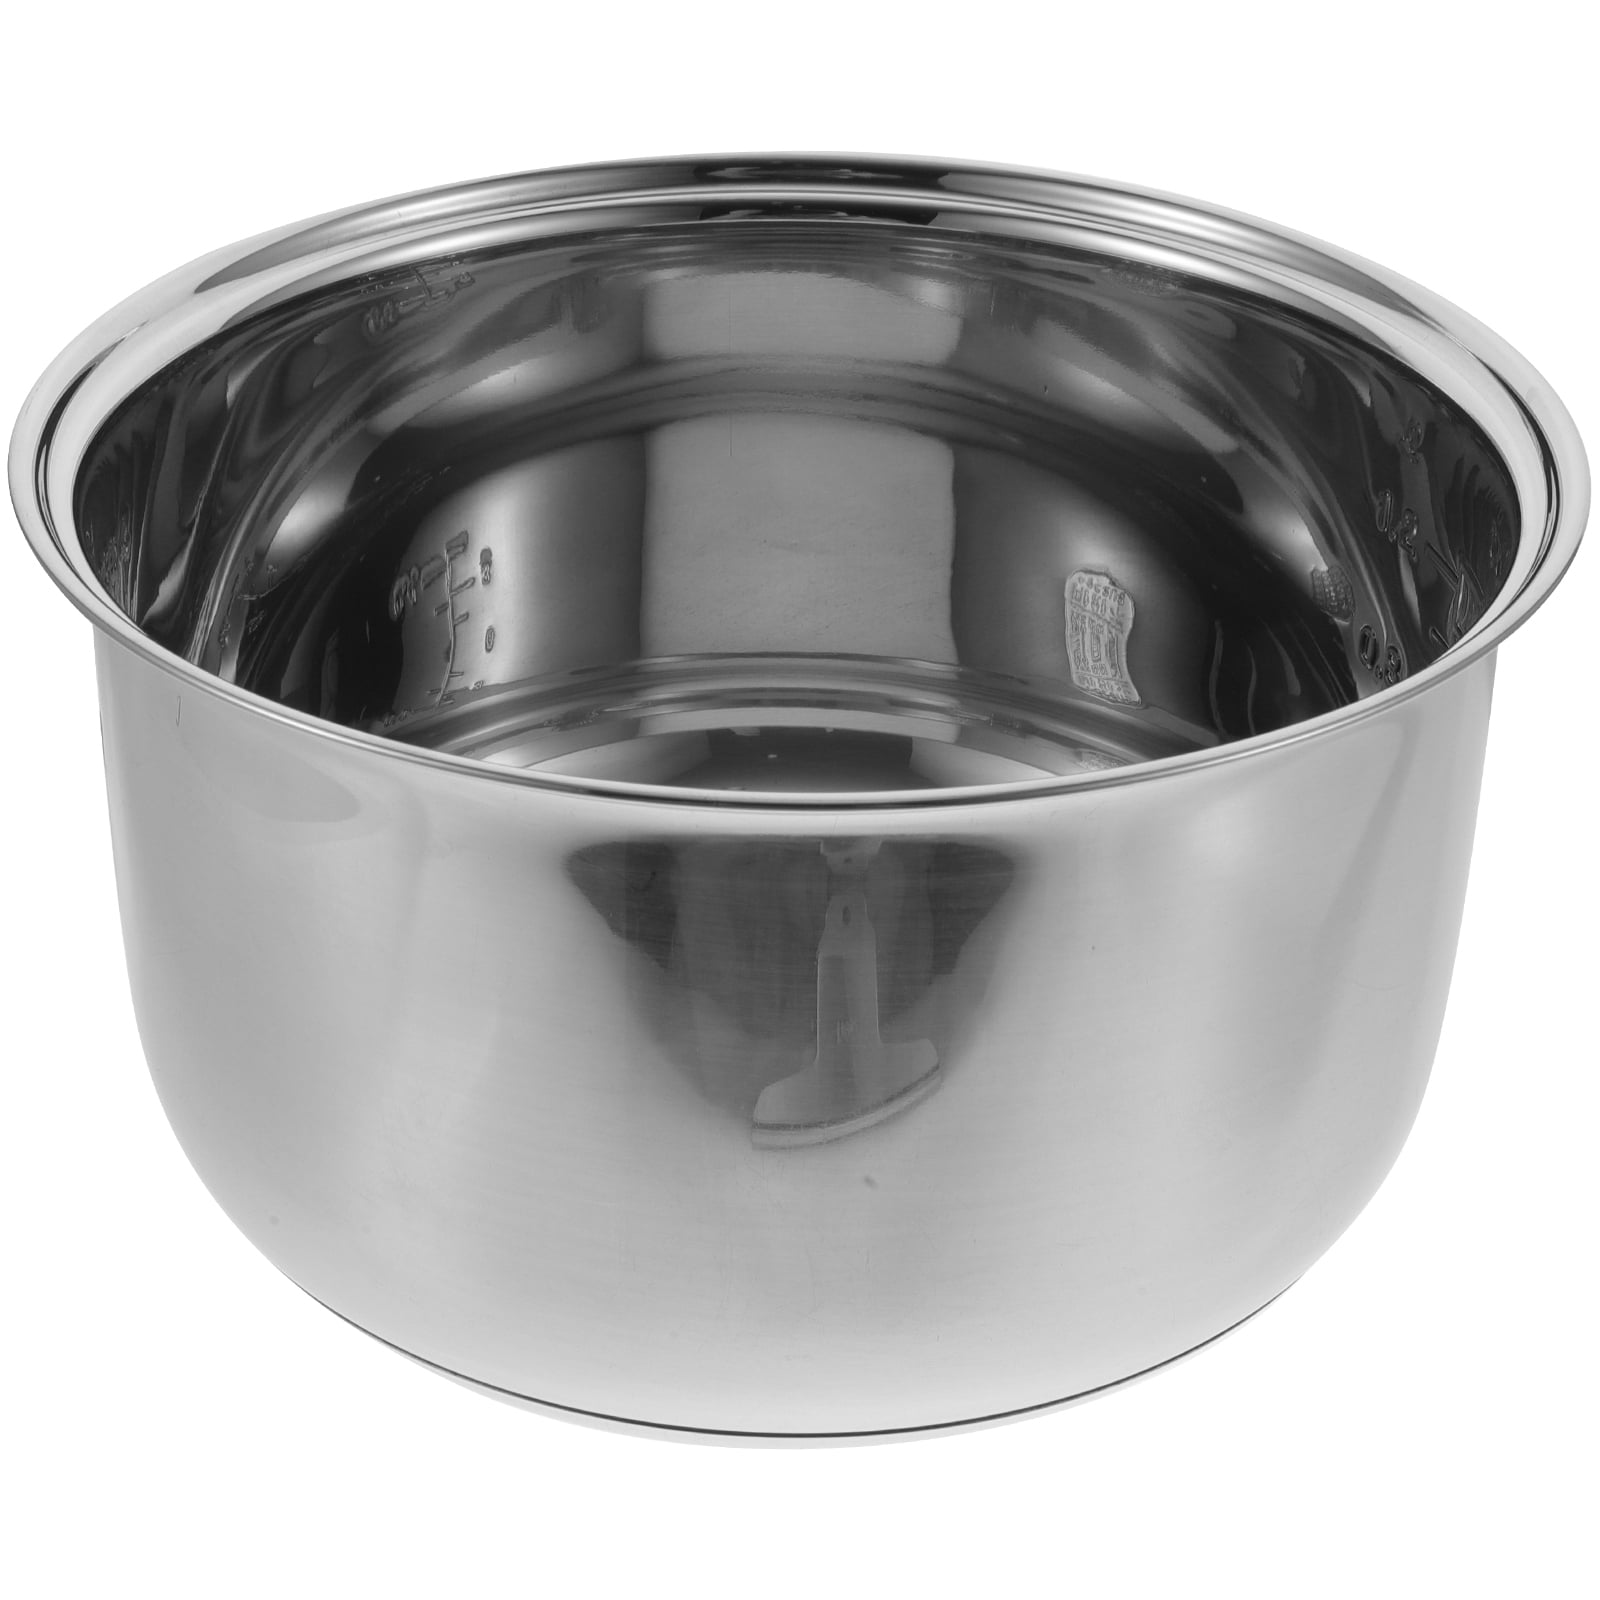  Luxshiny Rice Cooker Inner Pot 5l 14cm Non-stick Cooking Pot  Stainless Steel Sushi Bowl Steamer Pot Inner Tank Bucket Insert for Home  Kitchen Restaurant: Home & Kitchen